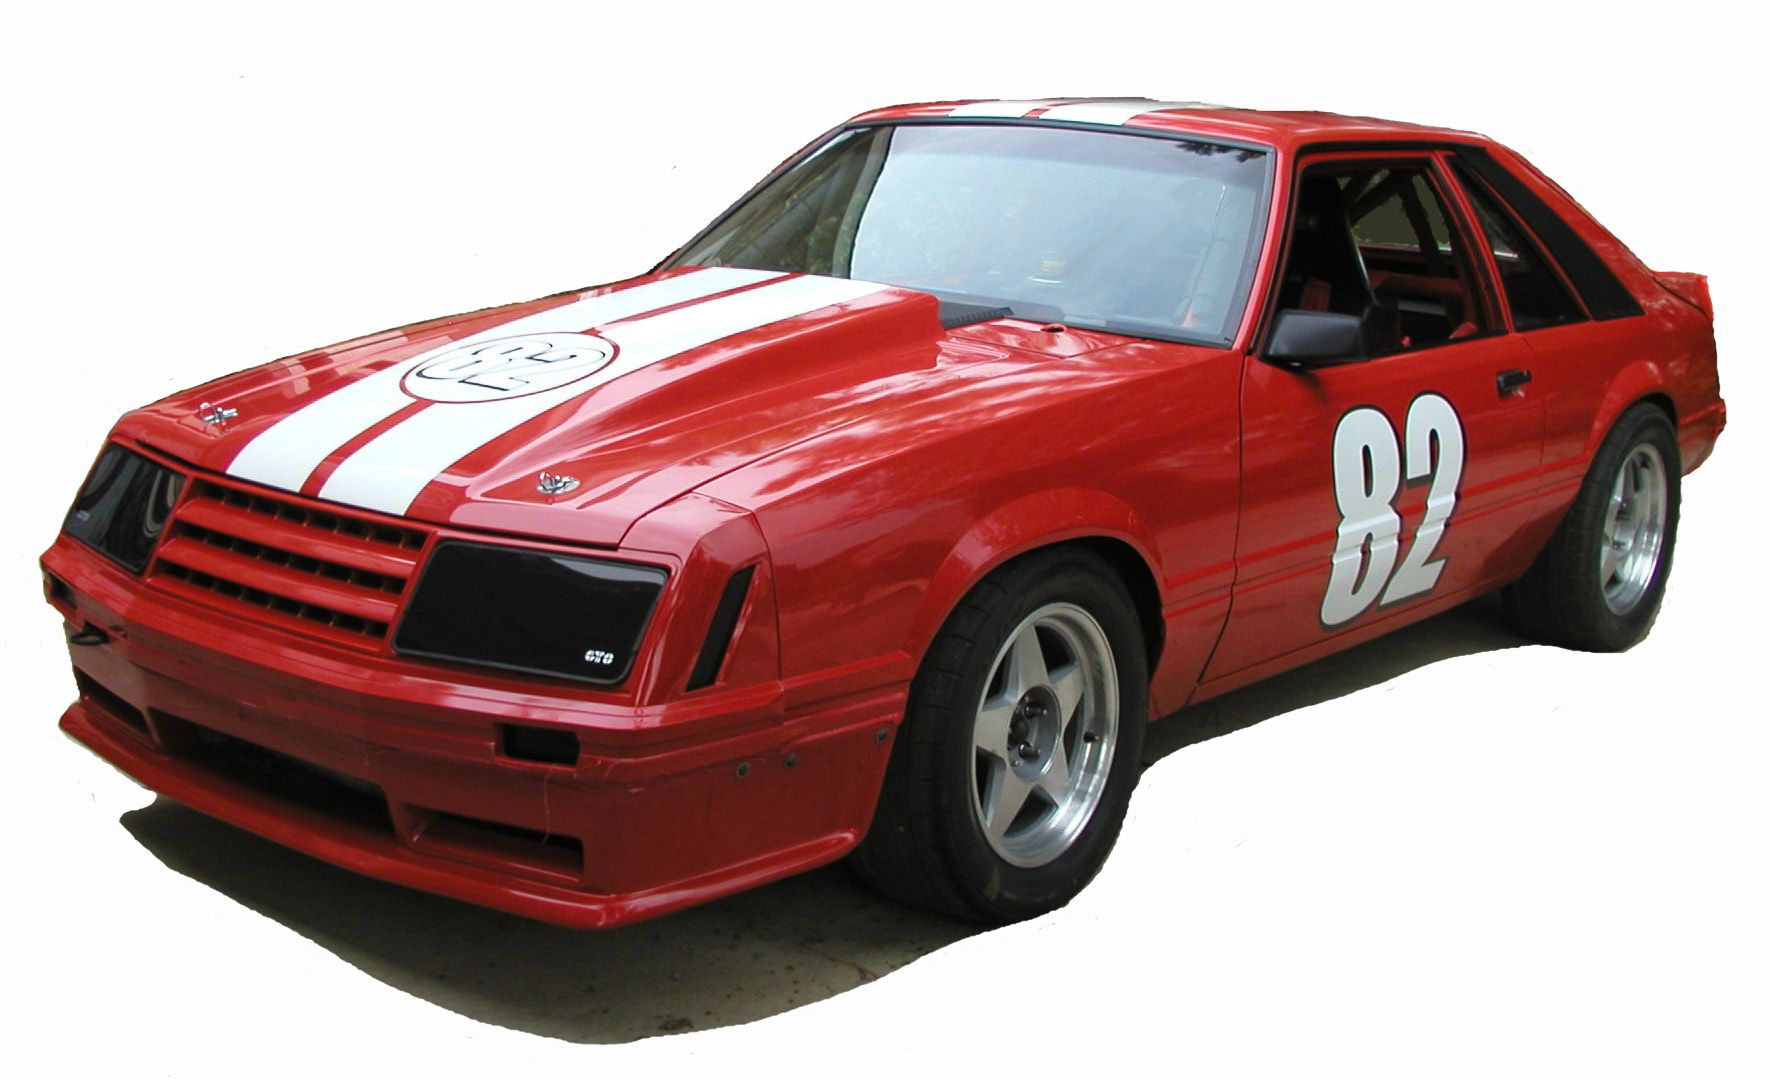 1982 Mustang
(82Foxredo)